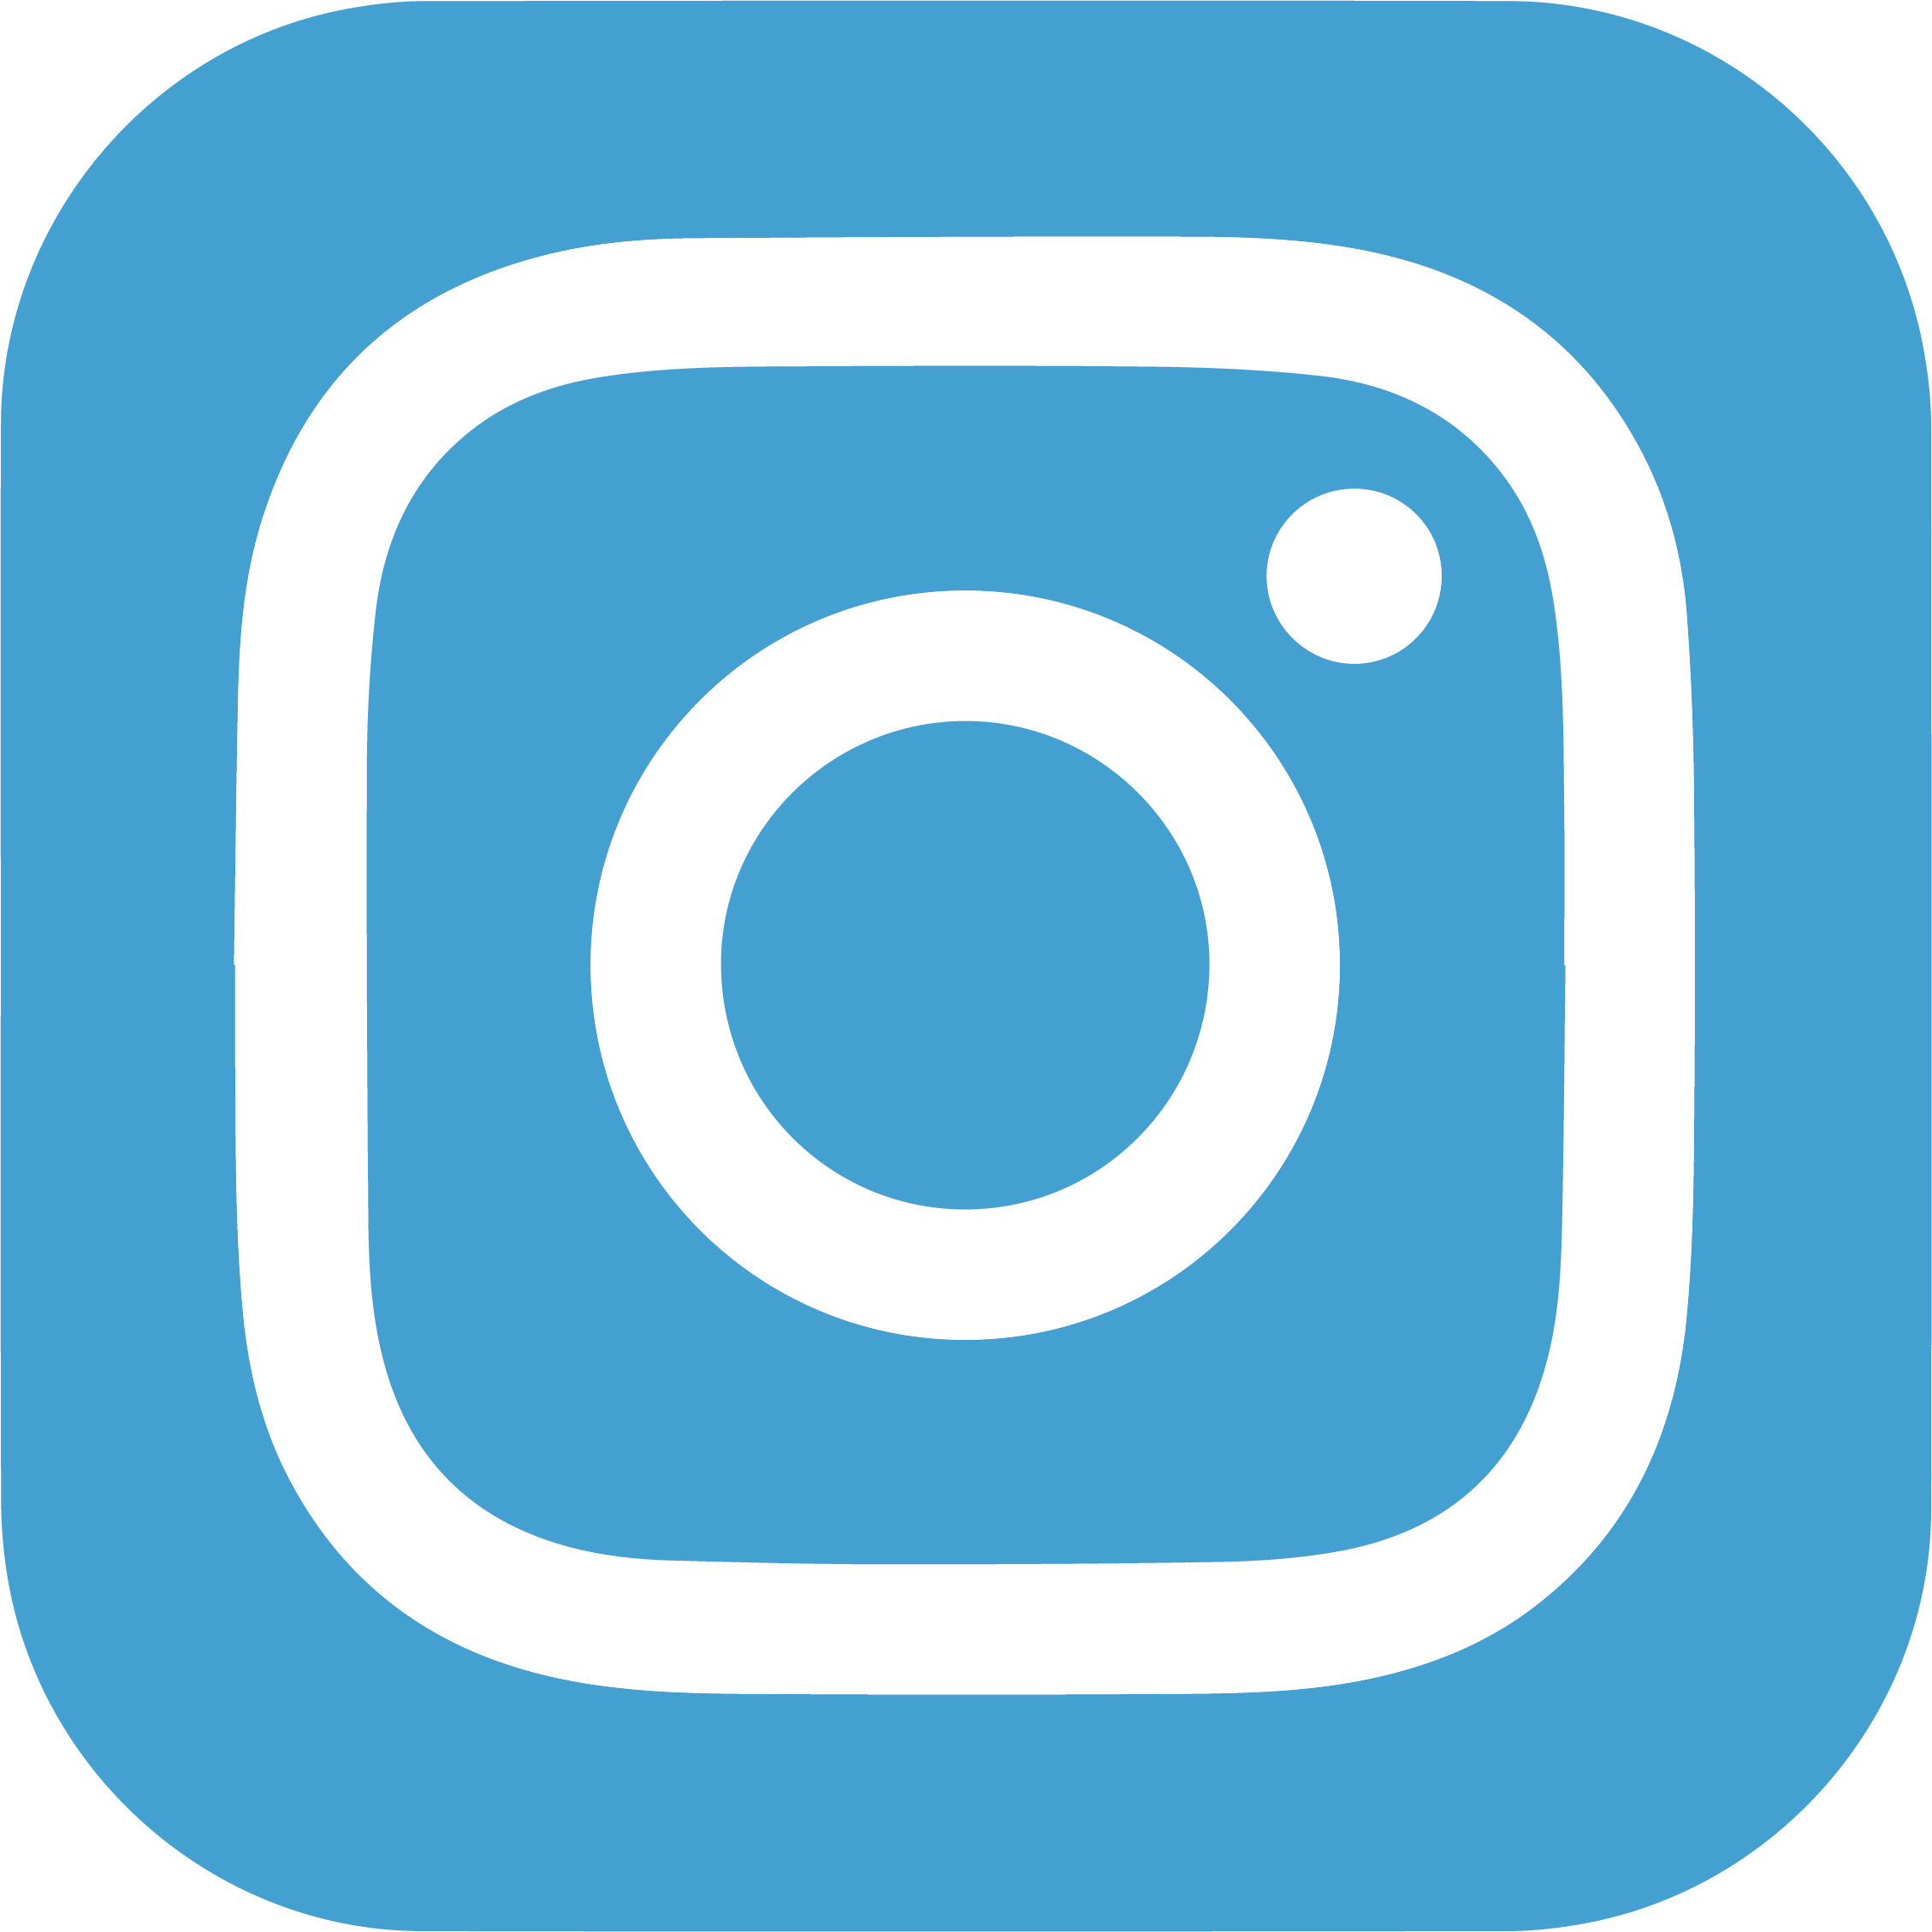 Download And Design Instagram Brand Product Facebook Logo HQ PNG Image |  FreePNGImg